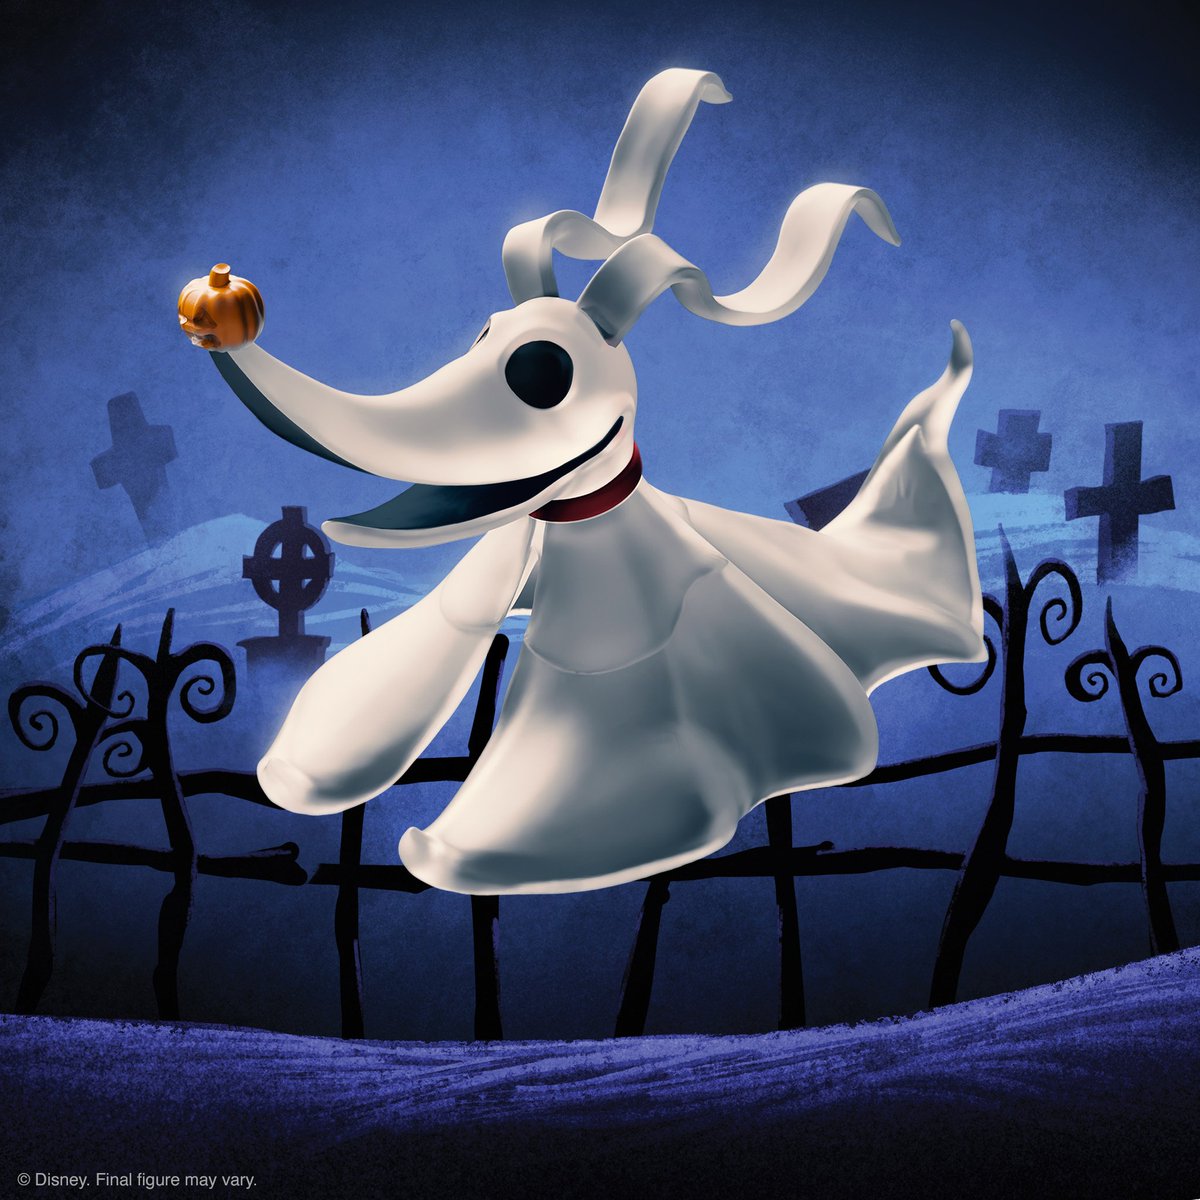 💥👻ALERT💥👻
#Repost from Super7
#Statoversians!!
😱
Every day is Halloween!

#ComingTomorrow
#animation #GamersUnite
TSO'VIN!!